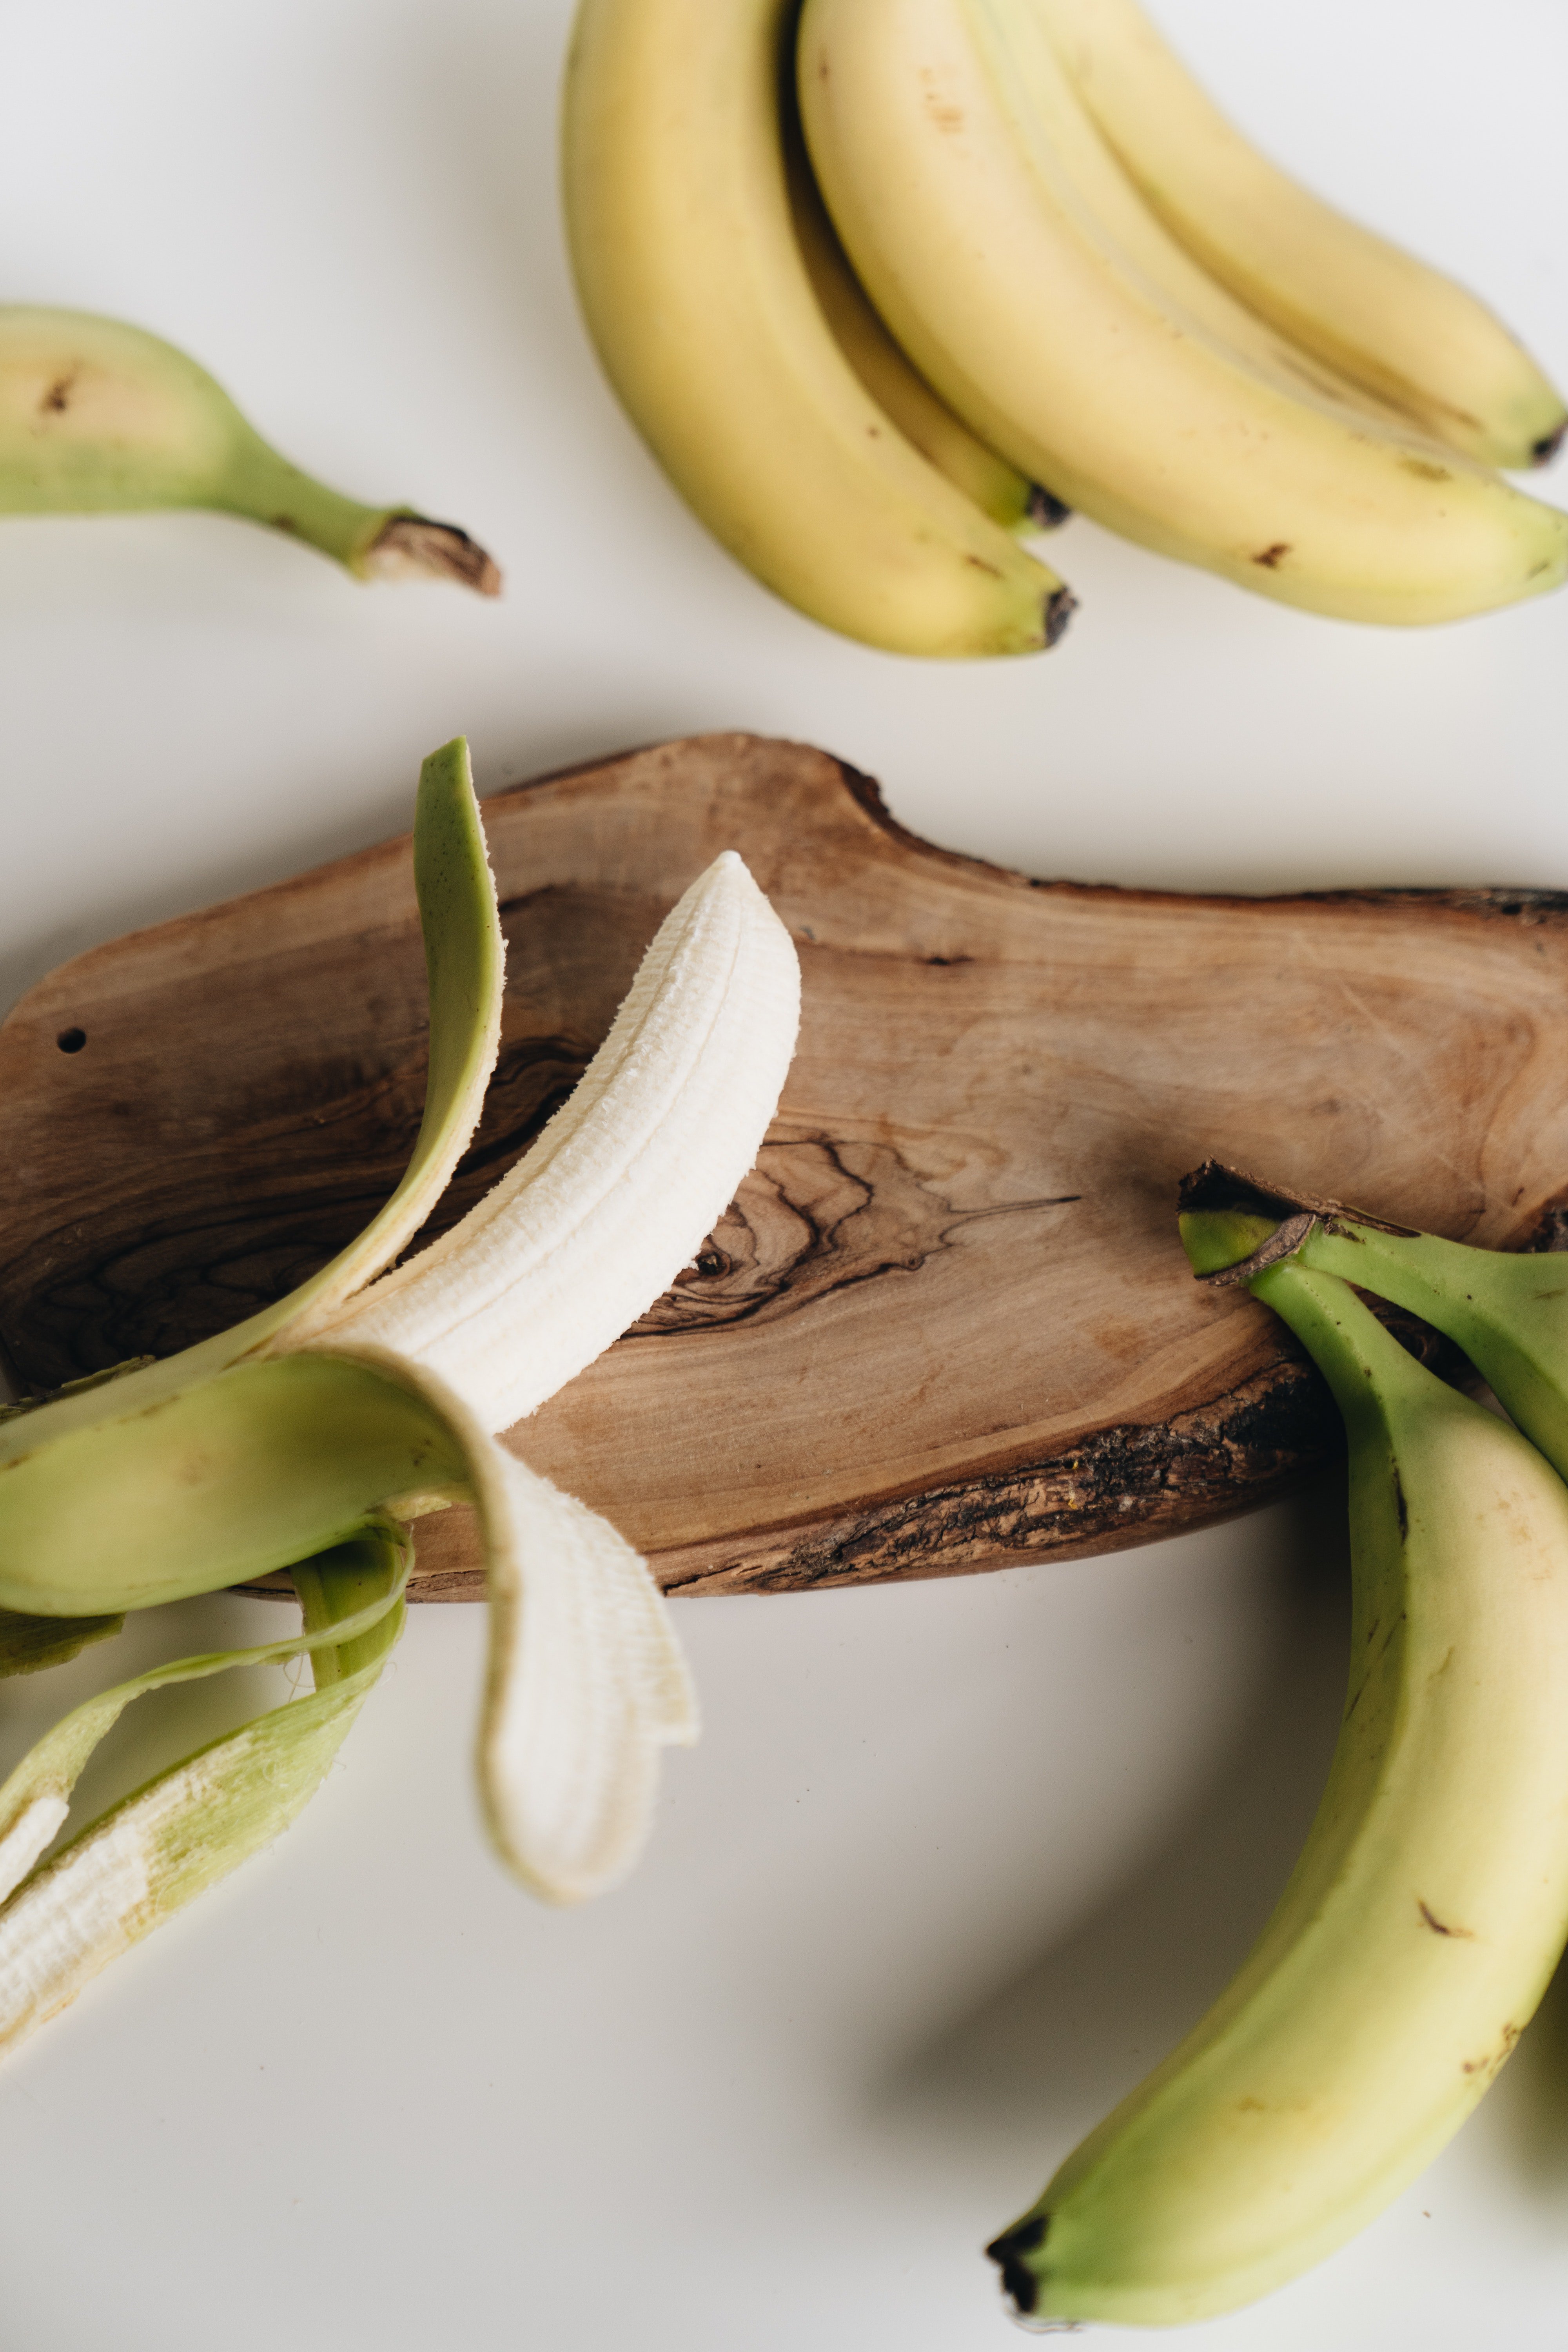 A peeled banana and a bunch of bananas on a slab